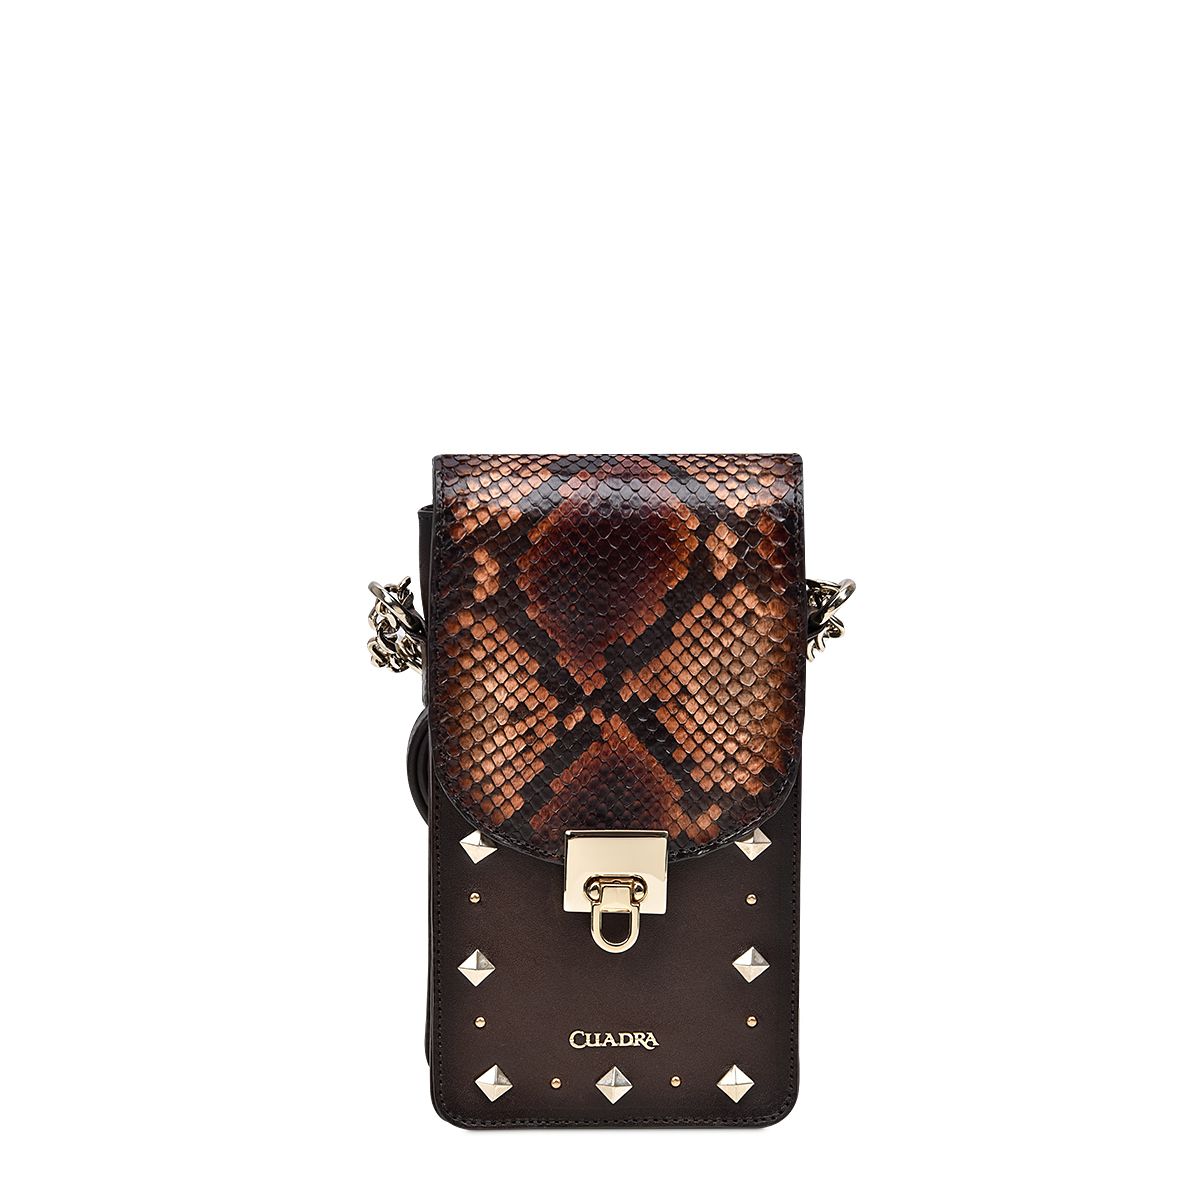 BOD38PI - Cuadra ocre casual fashion python smartphone wallet bag for women-Kuet.us